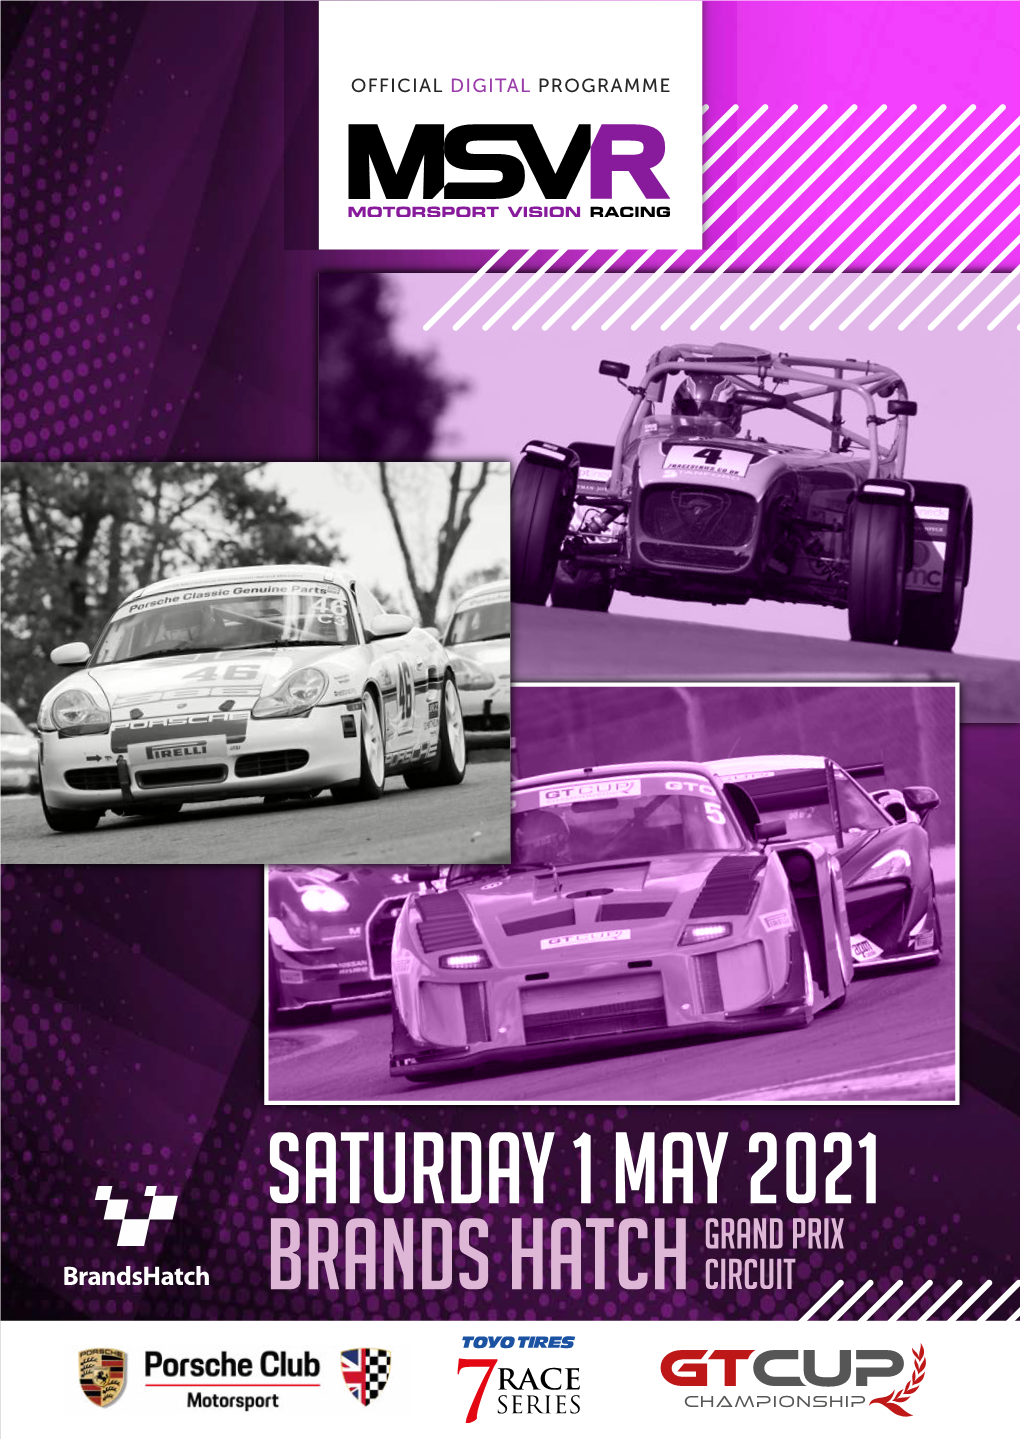 Saturday 1 May 2021 Brands Hatchgrand Prix